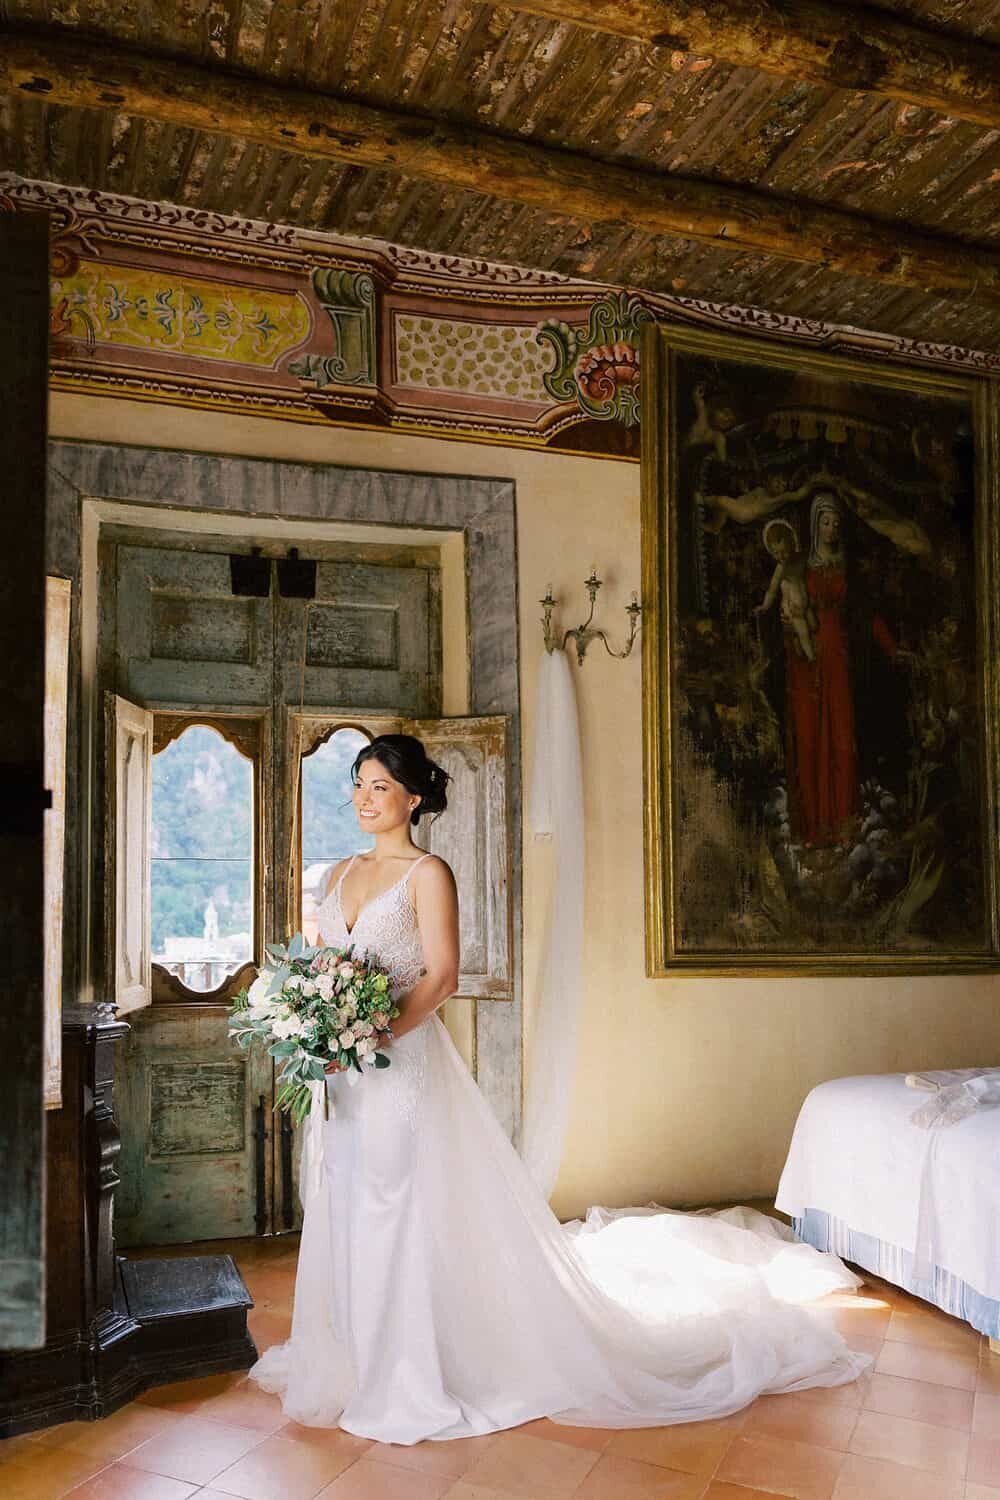 Positano-wedding-villa-San-Giacomo-brides-portrait-by-Julia-Kaptelova-Photography-217